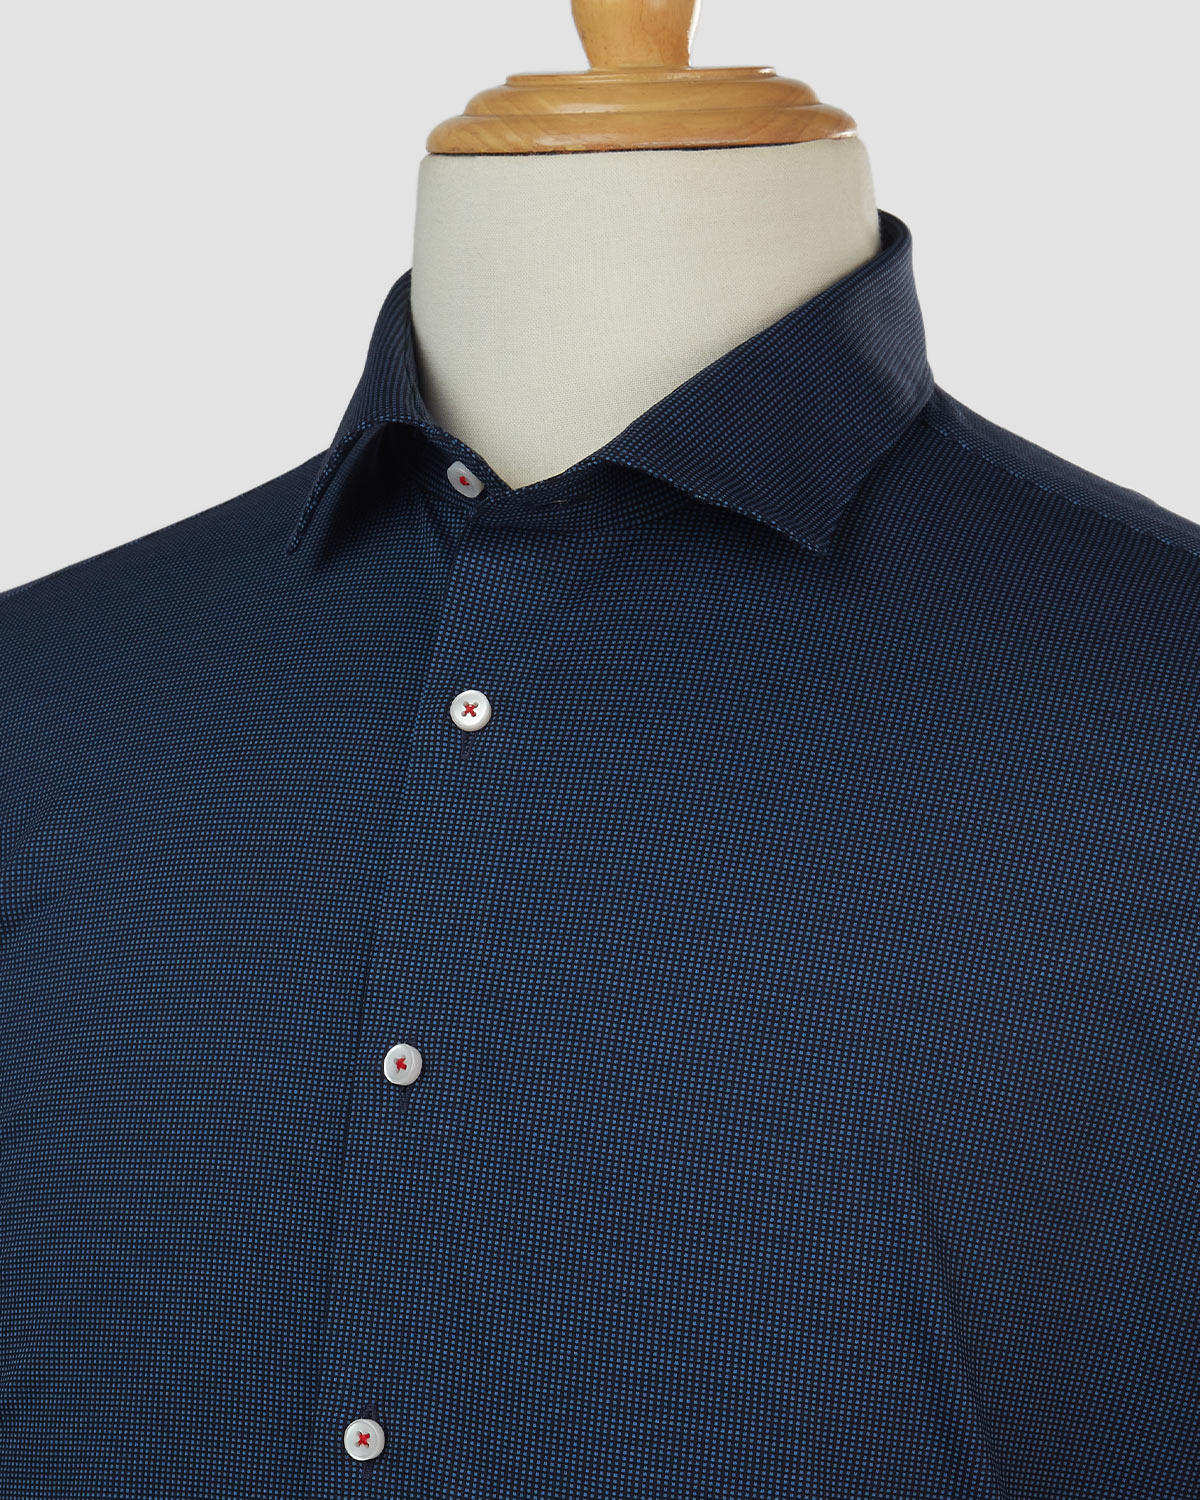 Bombay Shirt Company - Blue Zircon Knit Shirt